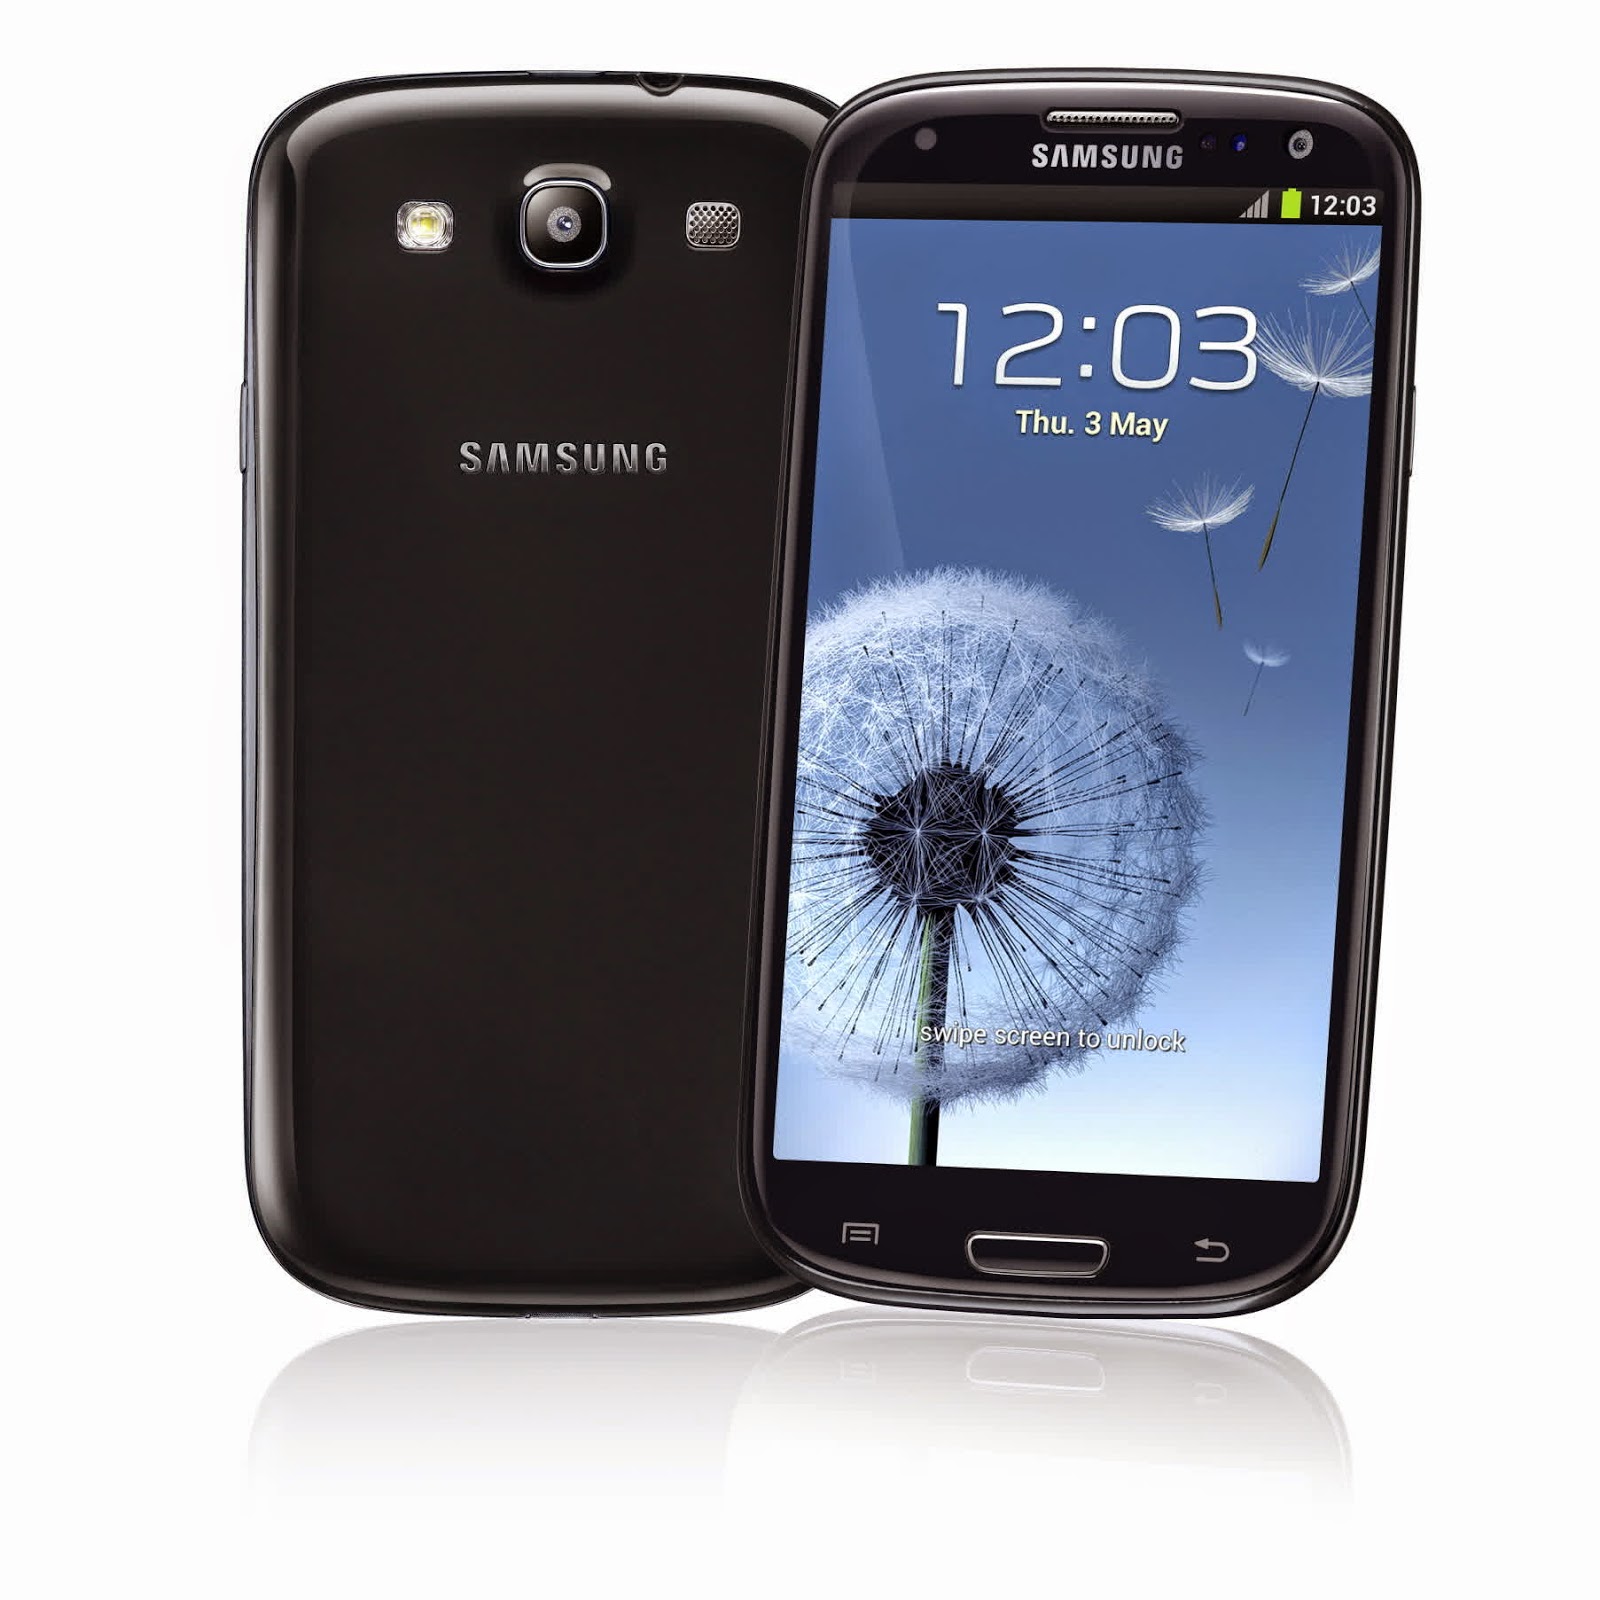 Daftar Harga Samsung Galaxy Update November 2014 Smartphone Android